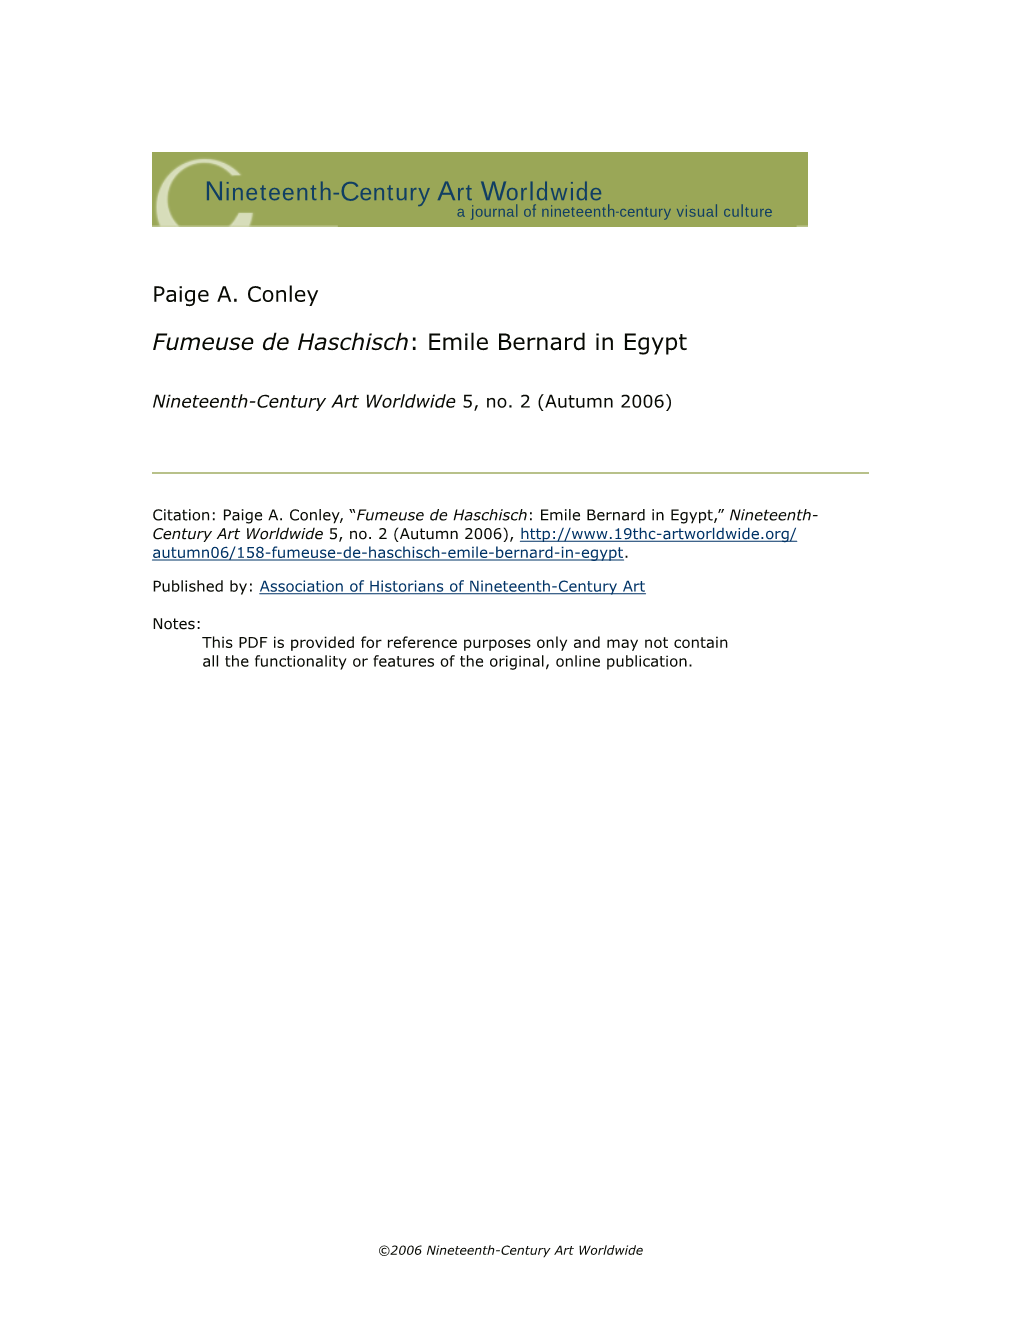 Fumeuse De Haschisch: Emile Bernard in Egypt